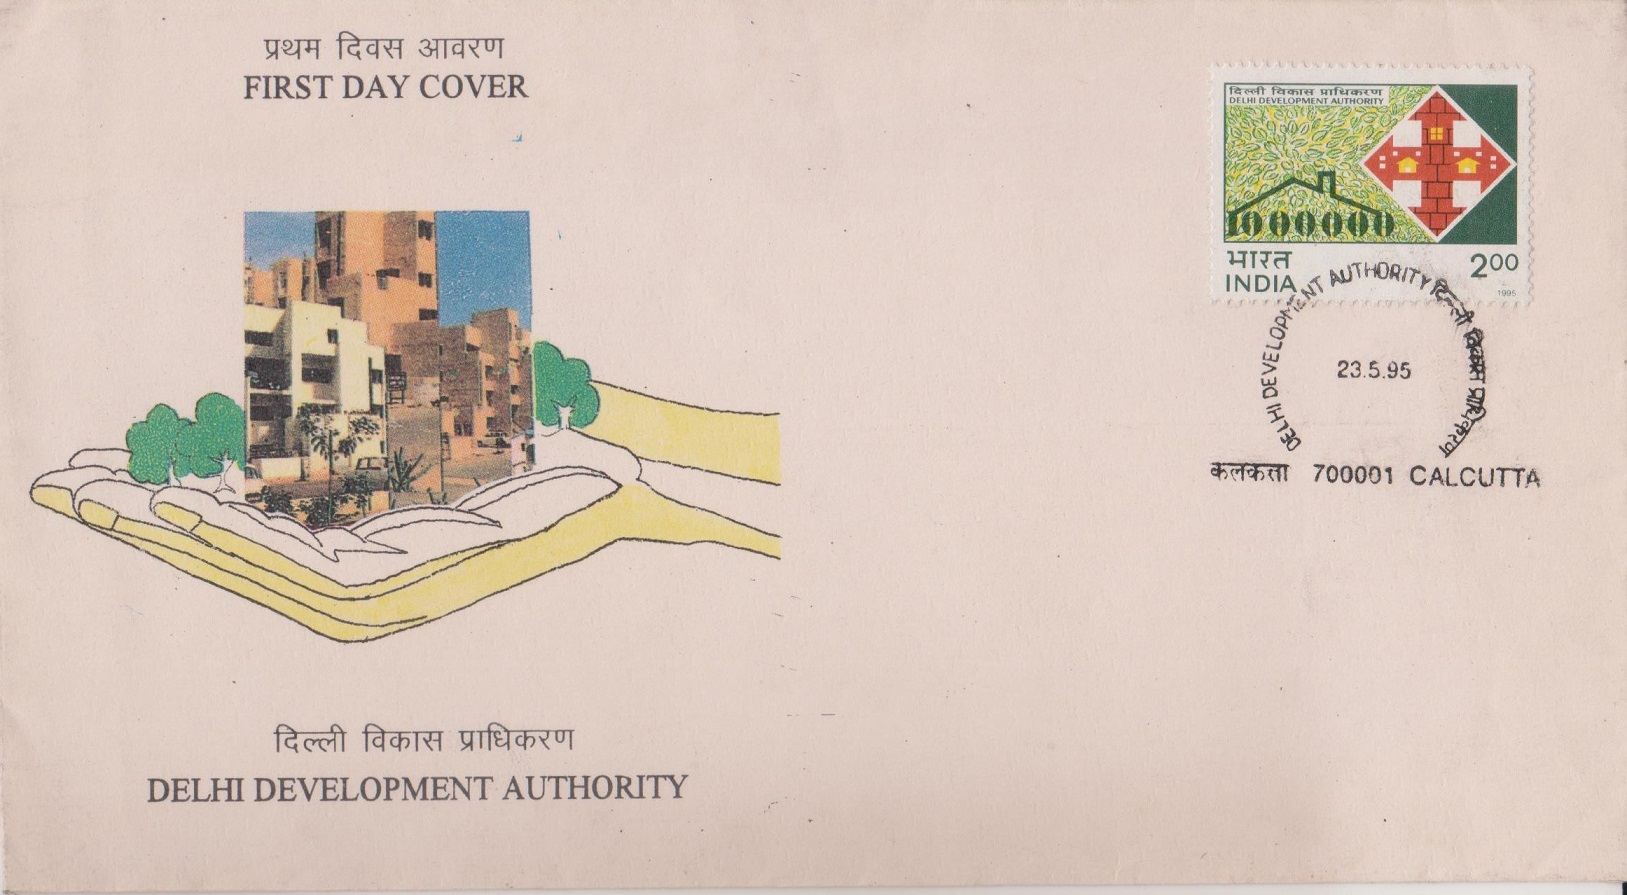  Delhi Development Authority (DDA)